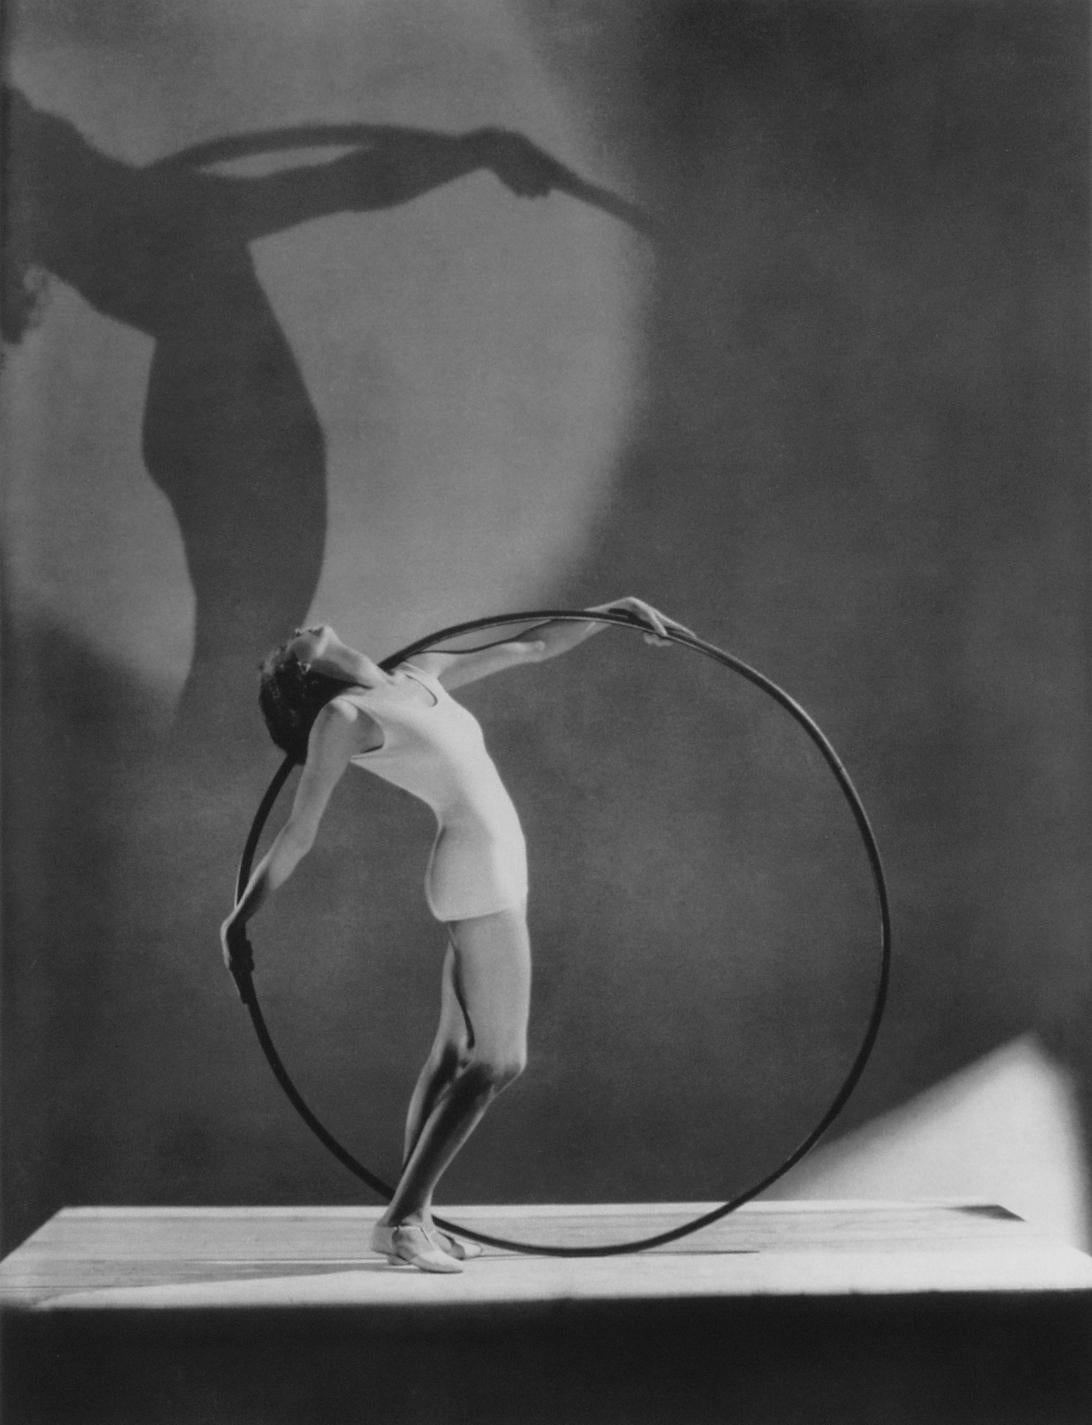 George Hoyningen-Huene Black and White Photograph - Miss E. Carise in Swimwear with Hula Hoop, Paris